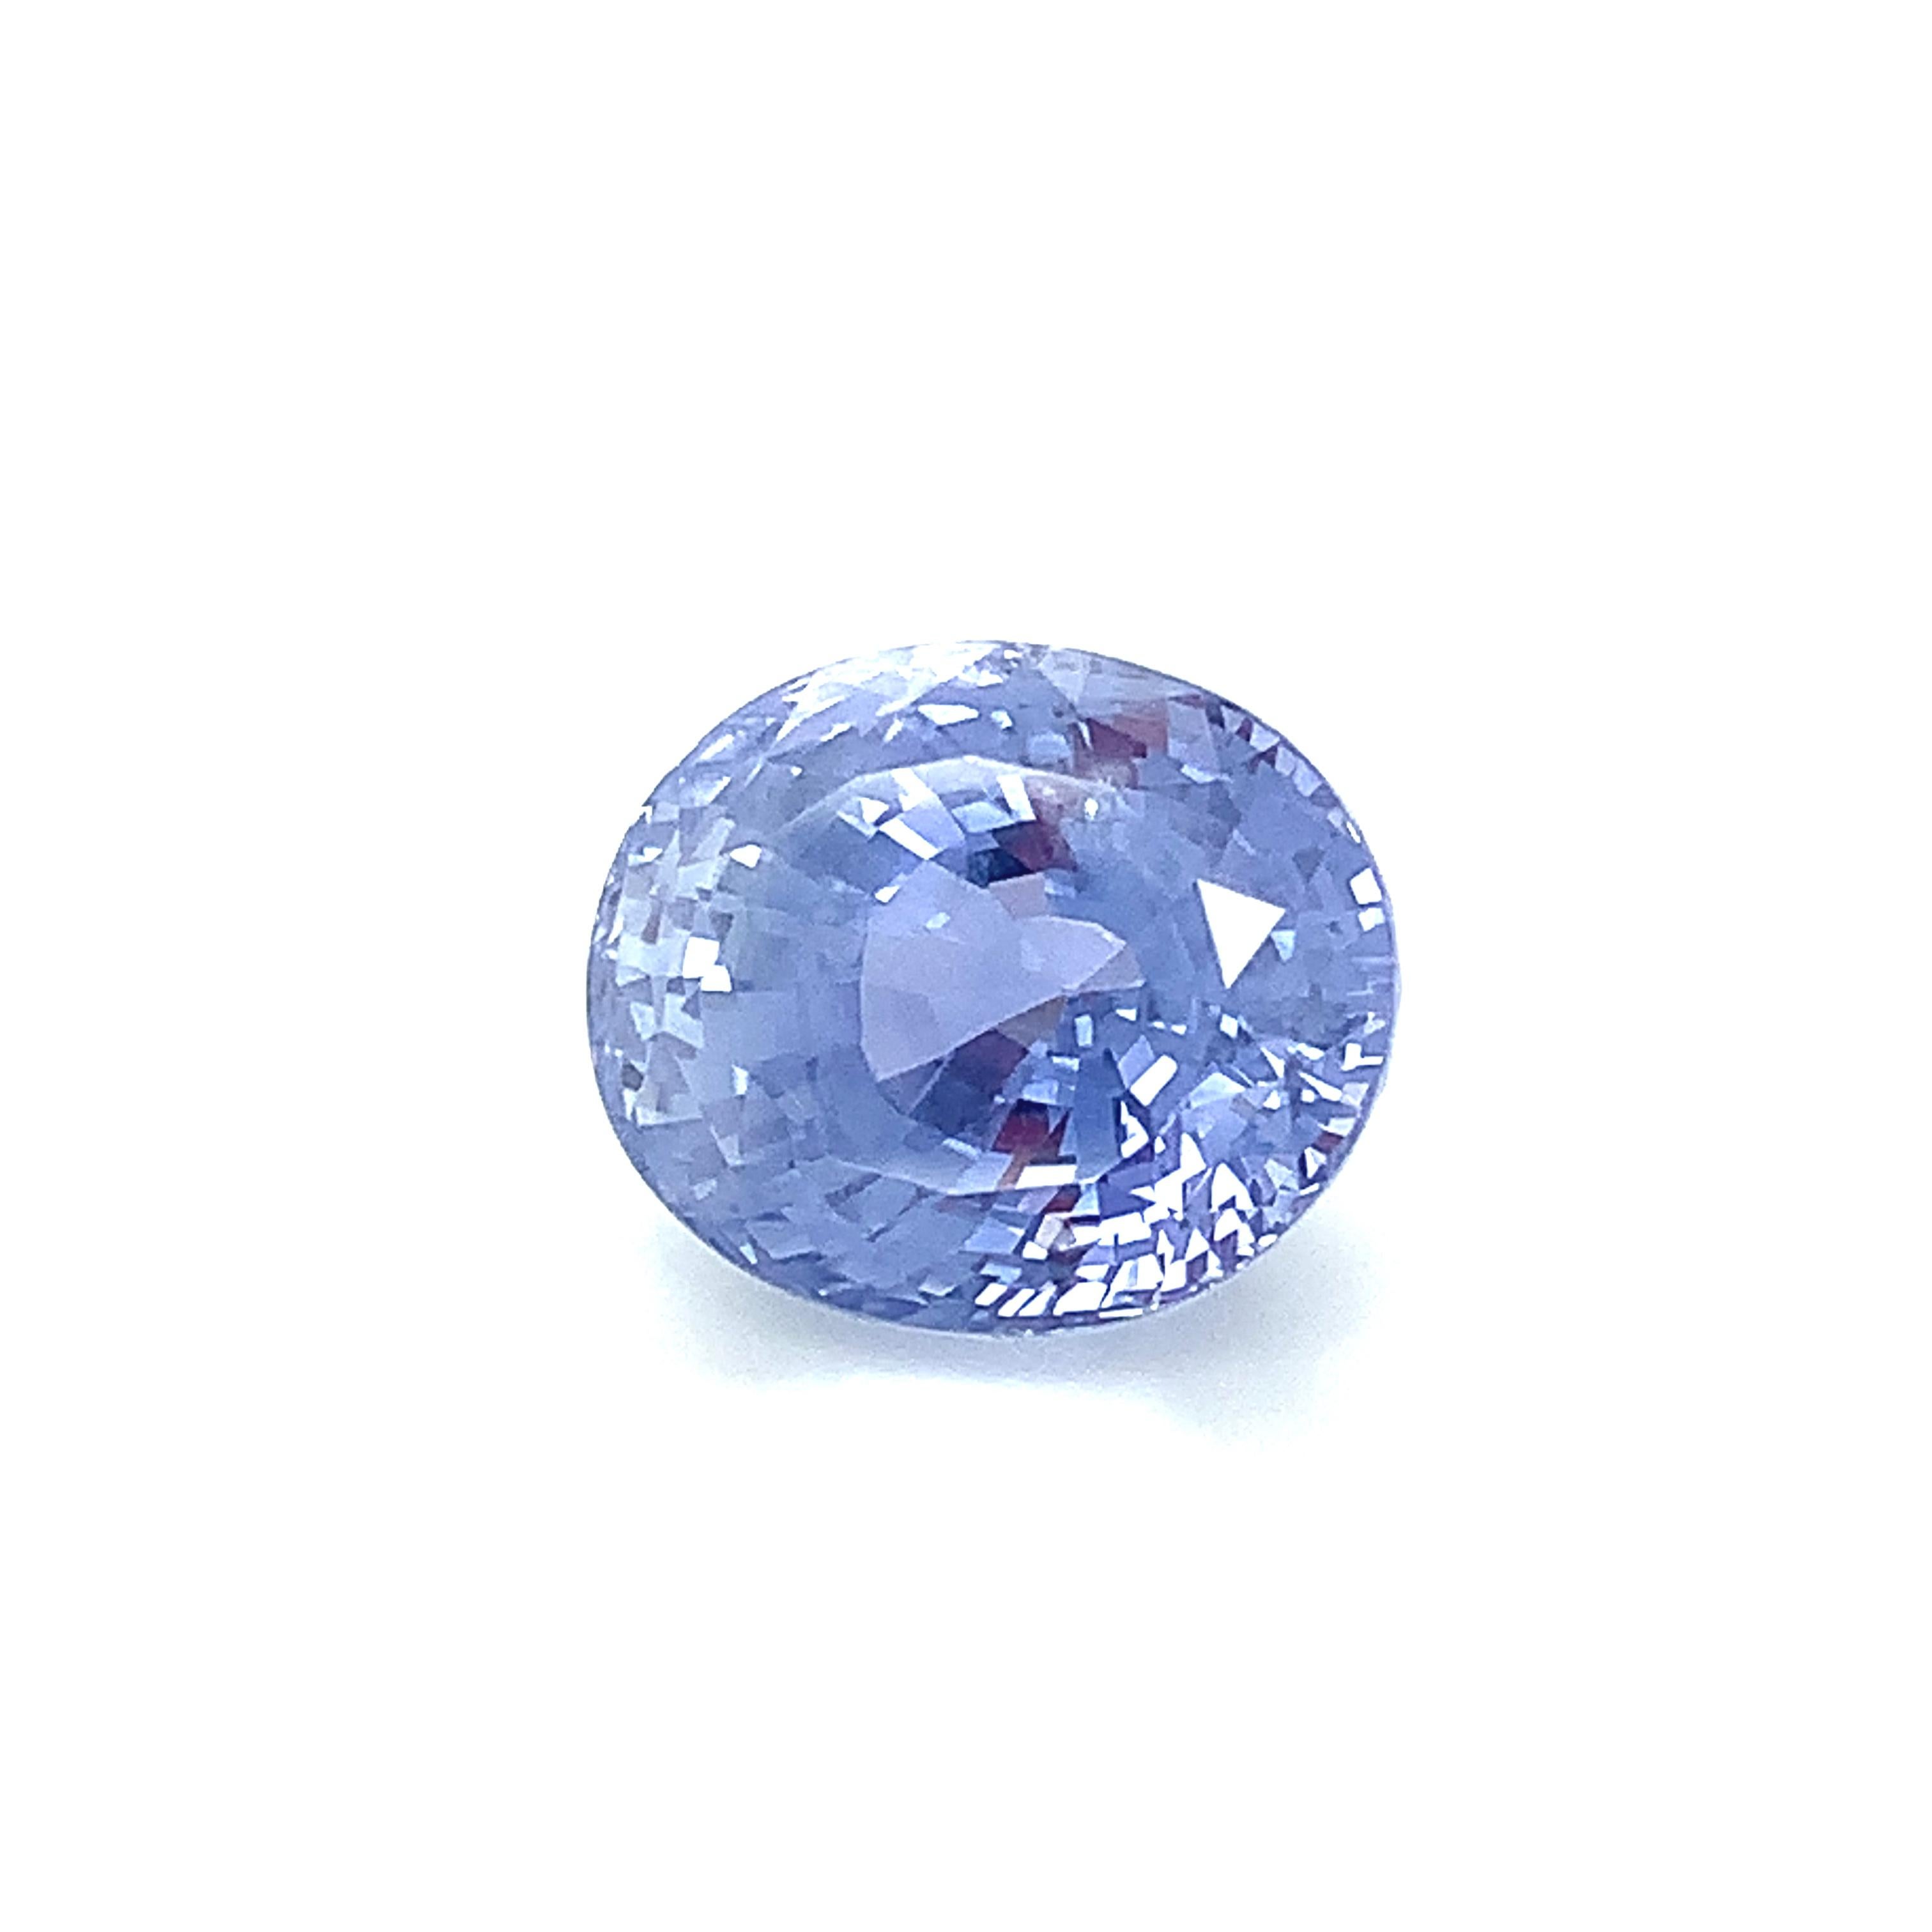 Oval Cut Unheated 17.13 Carat Ceylon Violet Blue Sapphire, Loose Gemstone, GIA CertifiedA For Sale